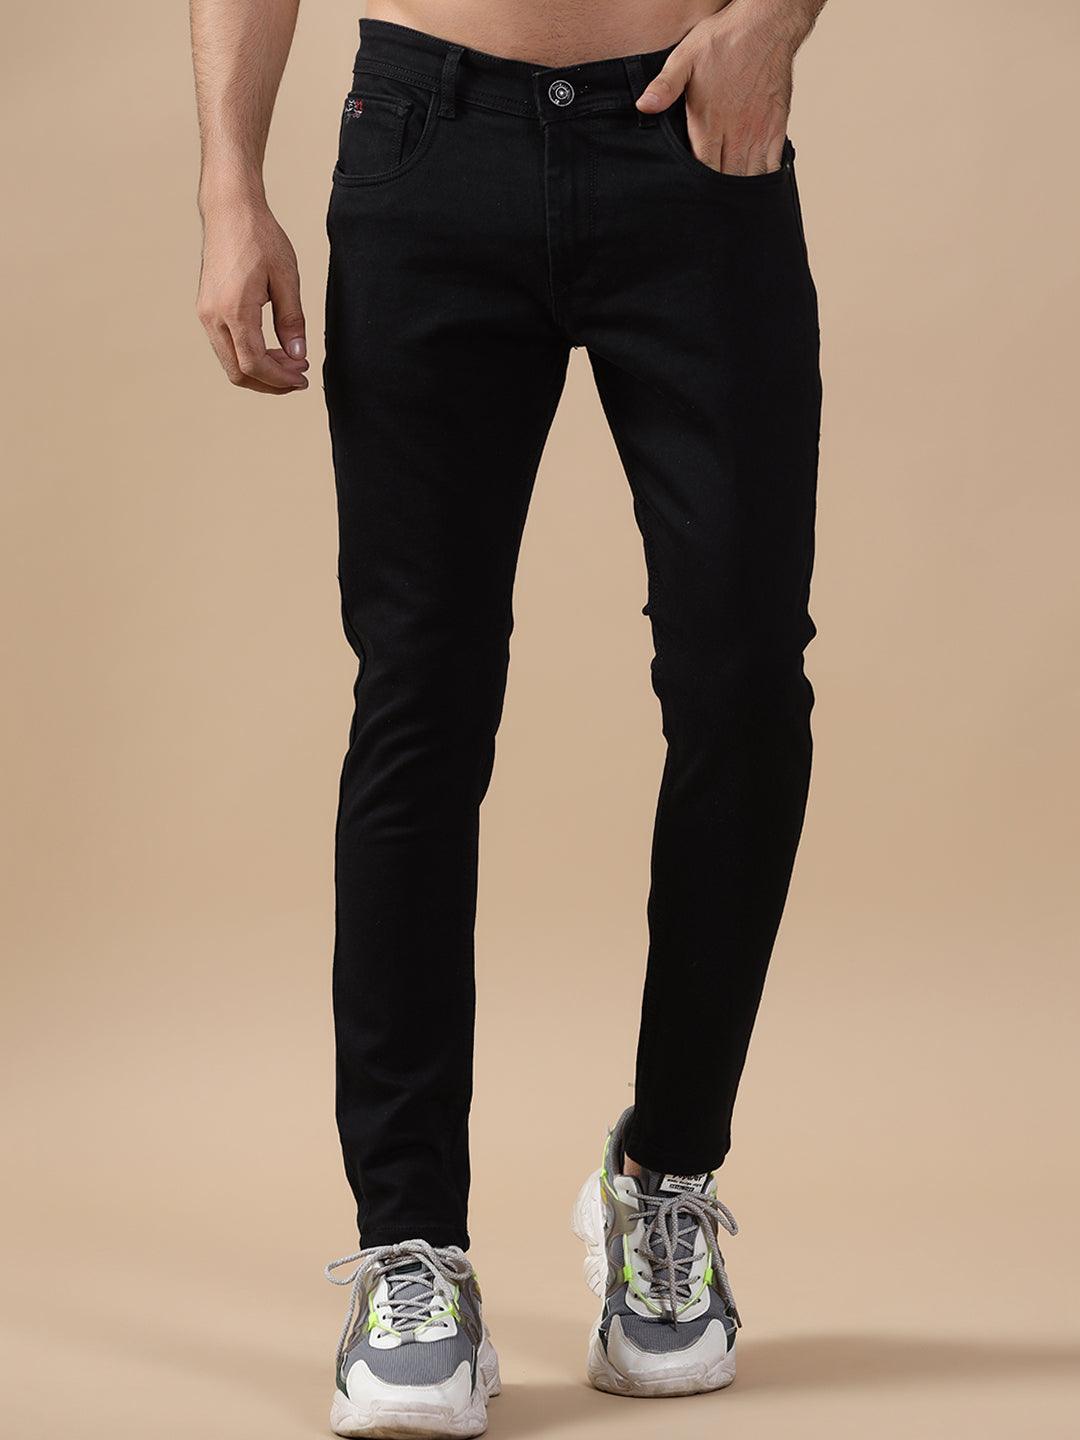 Buy Black Denim Men's Jeans Online At Best Prices | Tistabene